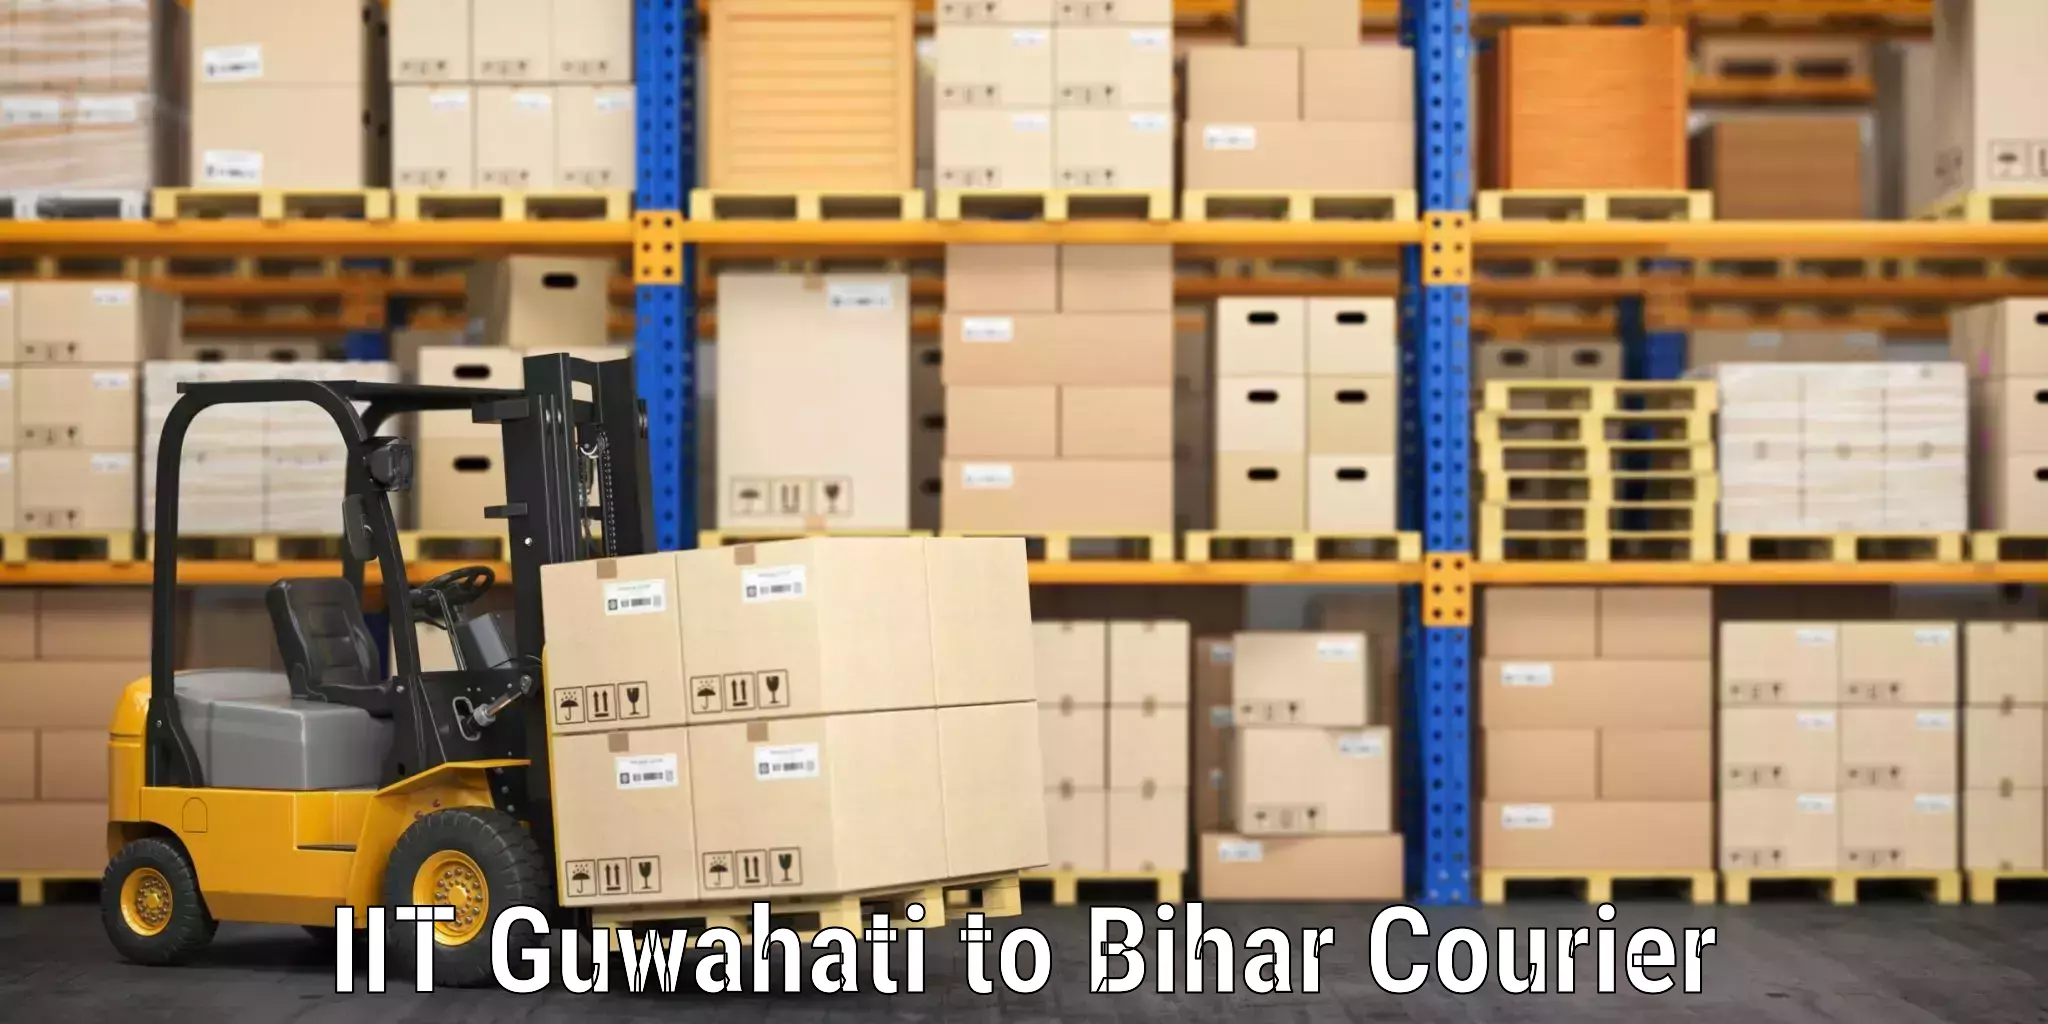 Luggage shipment tracking IIT Guwahati to Bihar